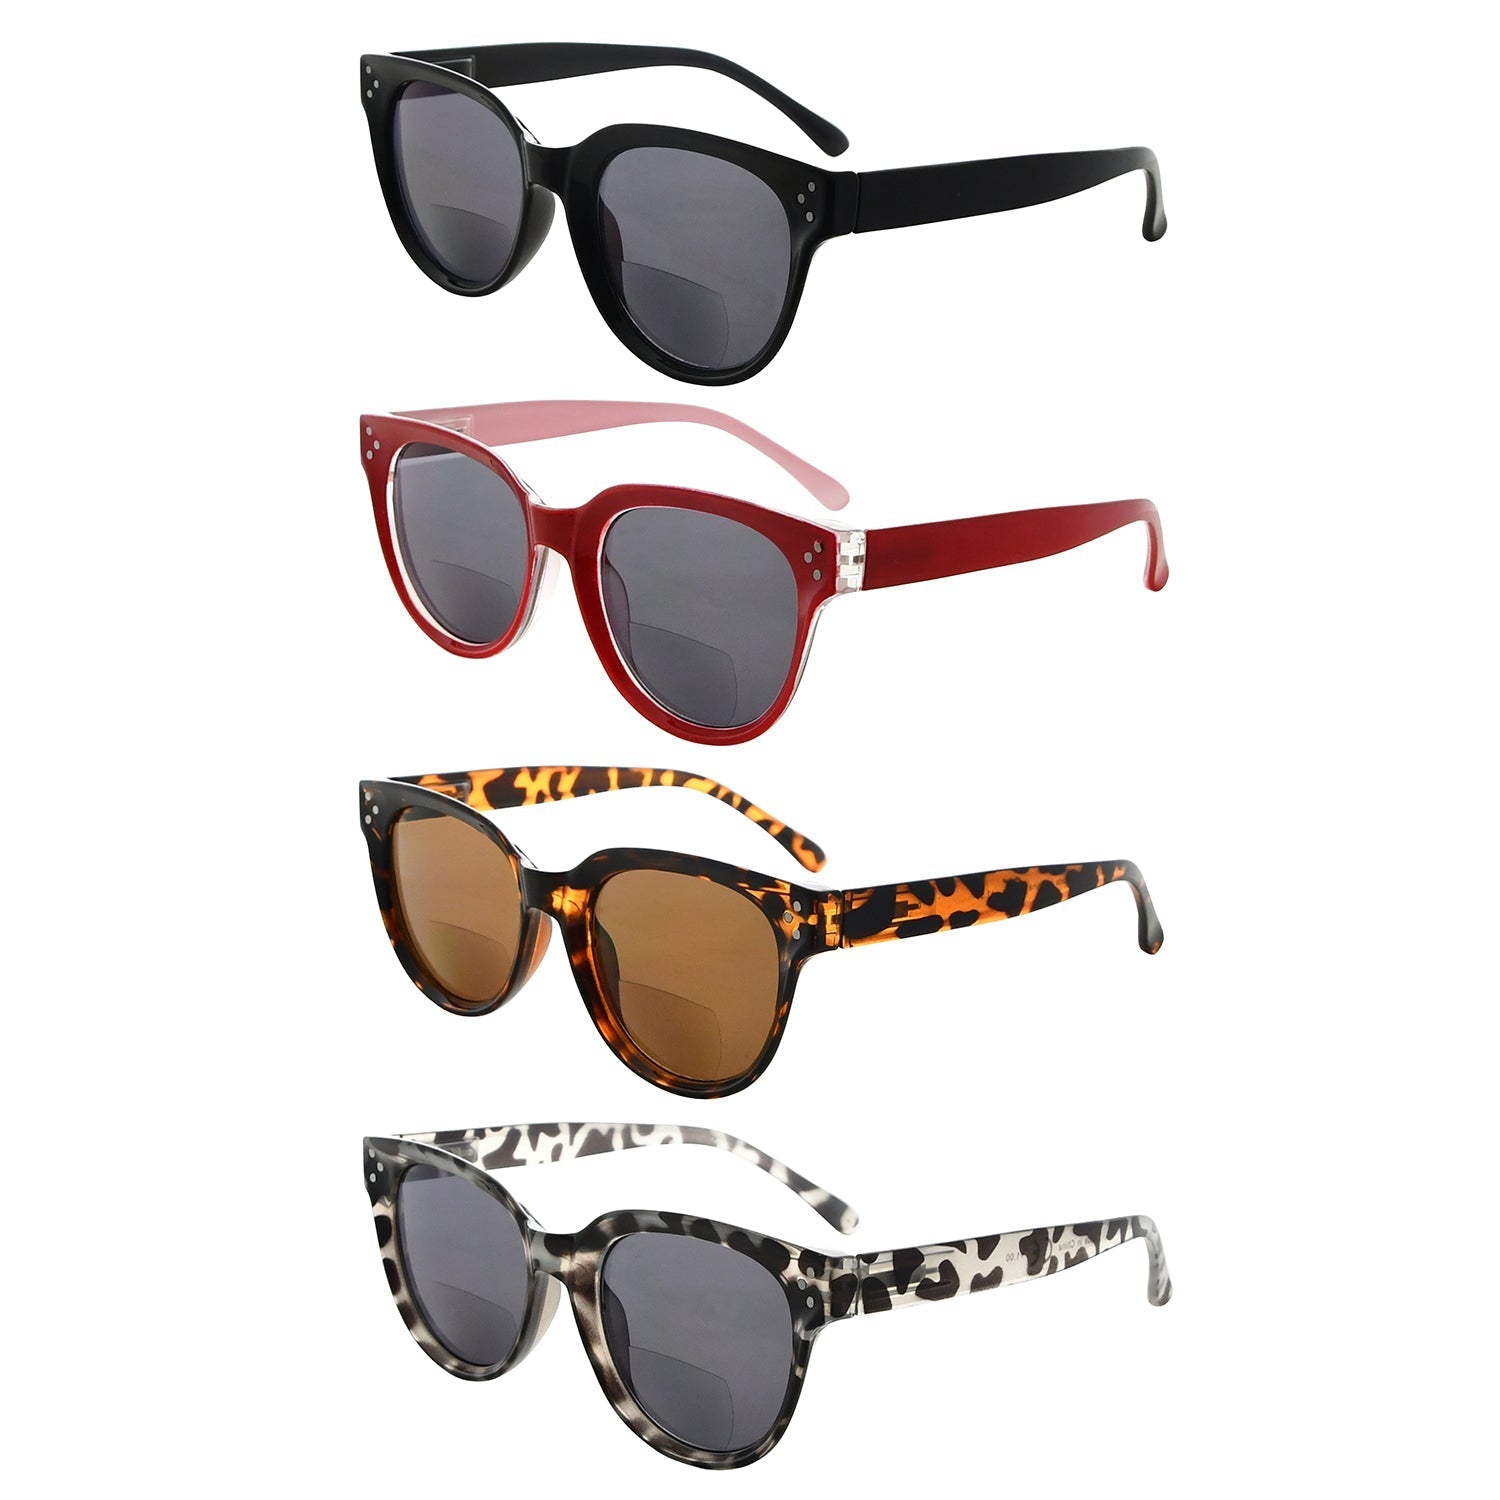 Fashionable - Aruba Sunglasses: The aruba sunglasses in... | Facebook